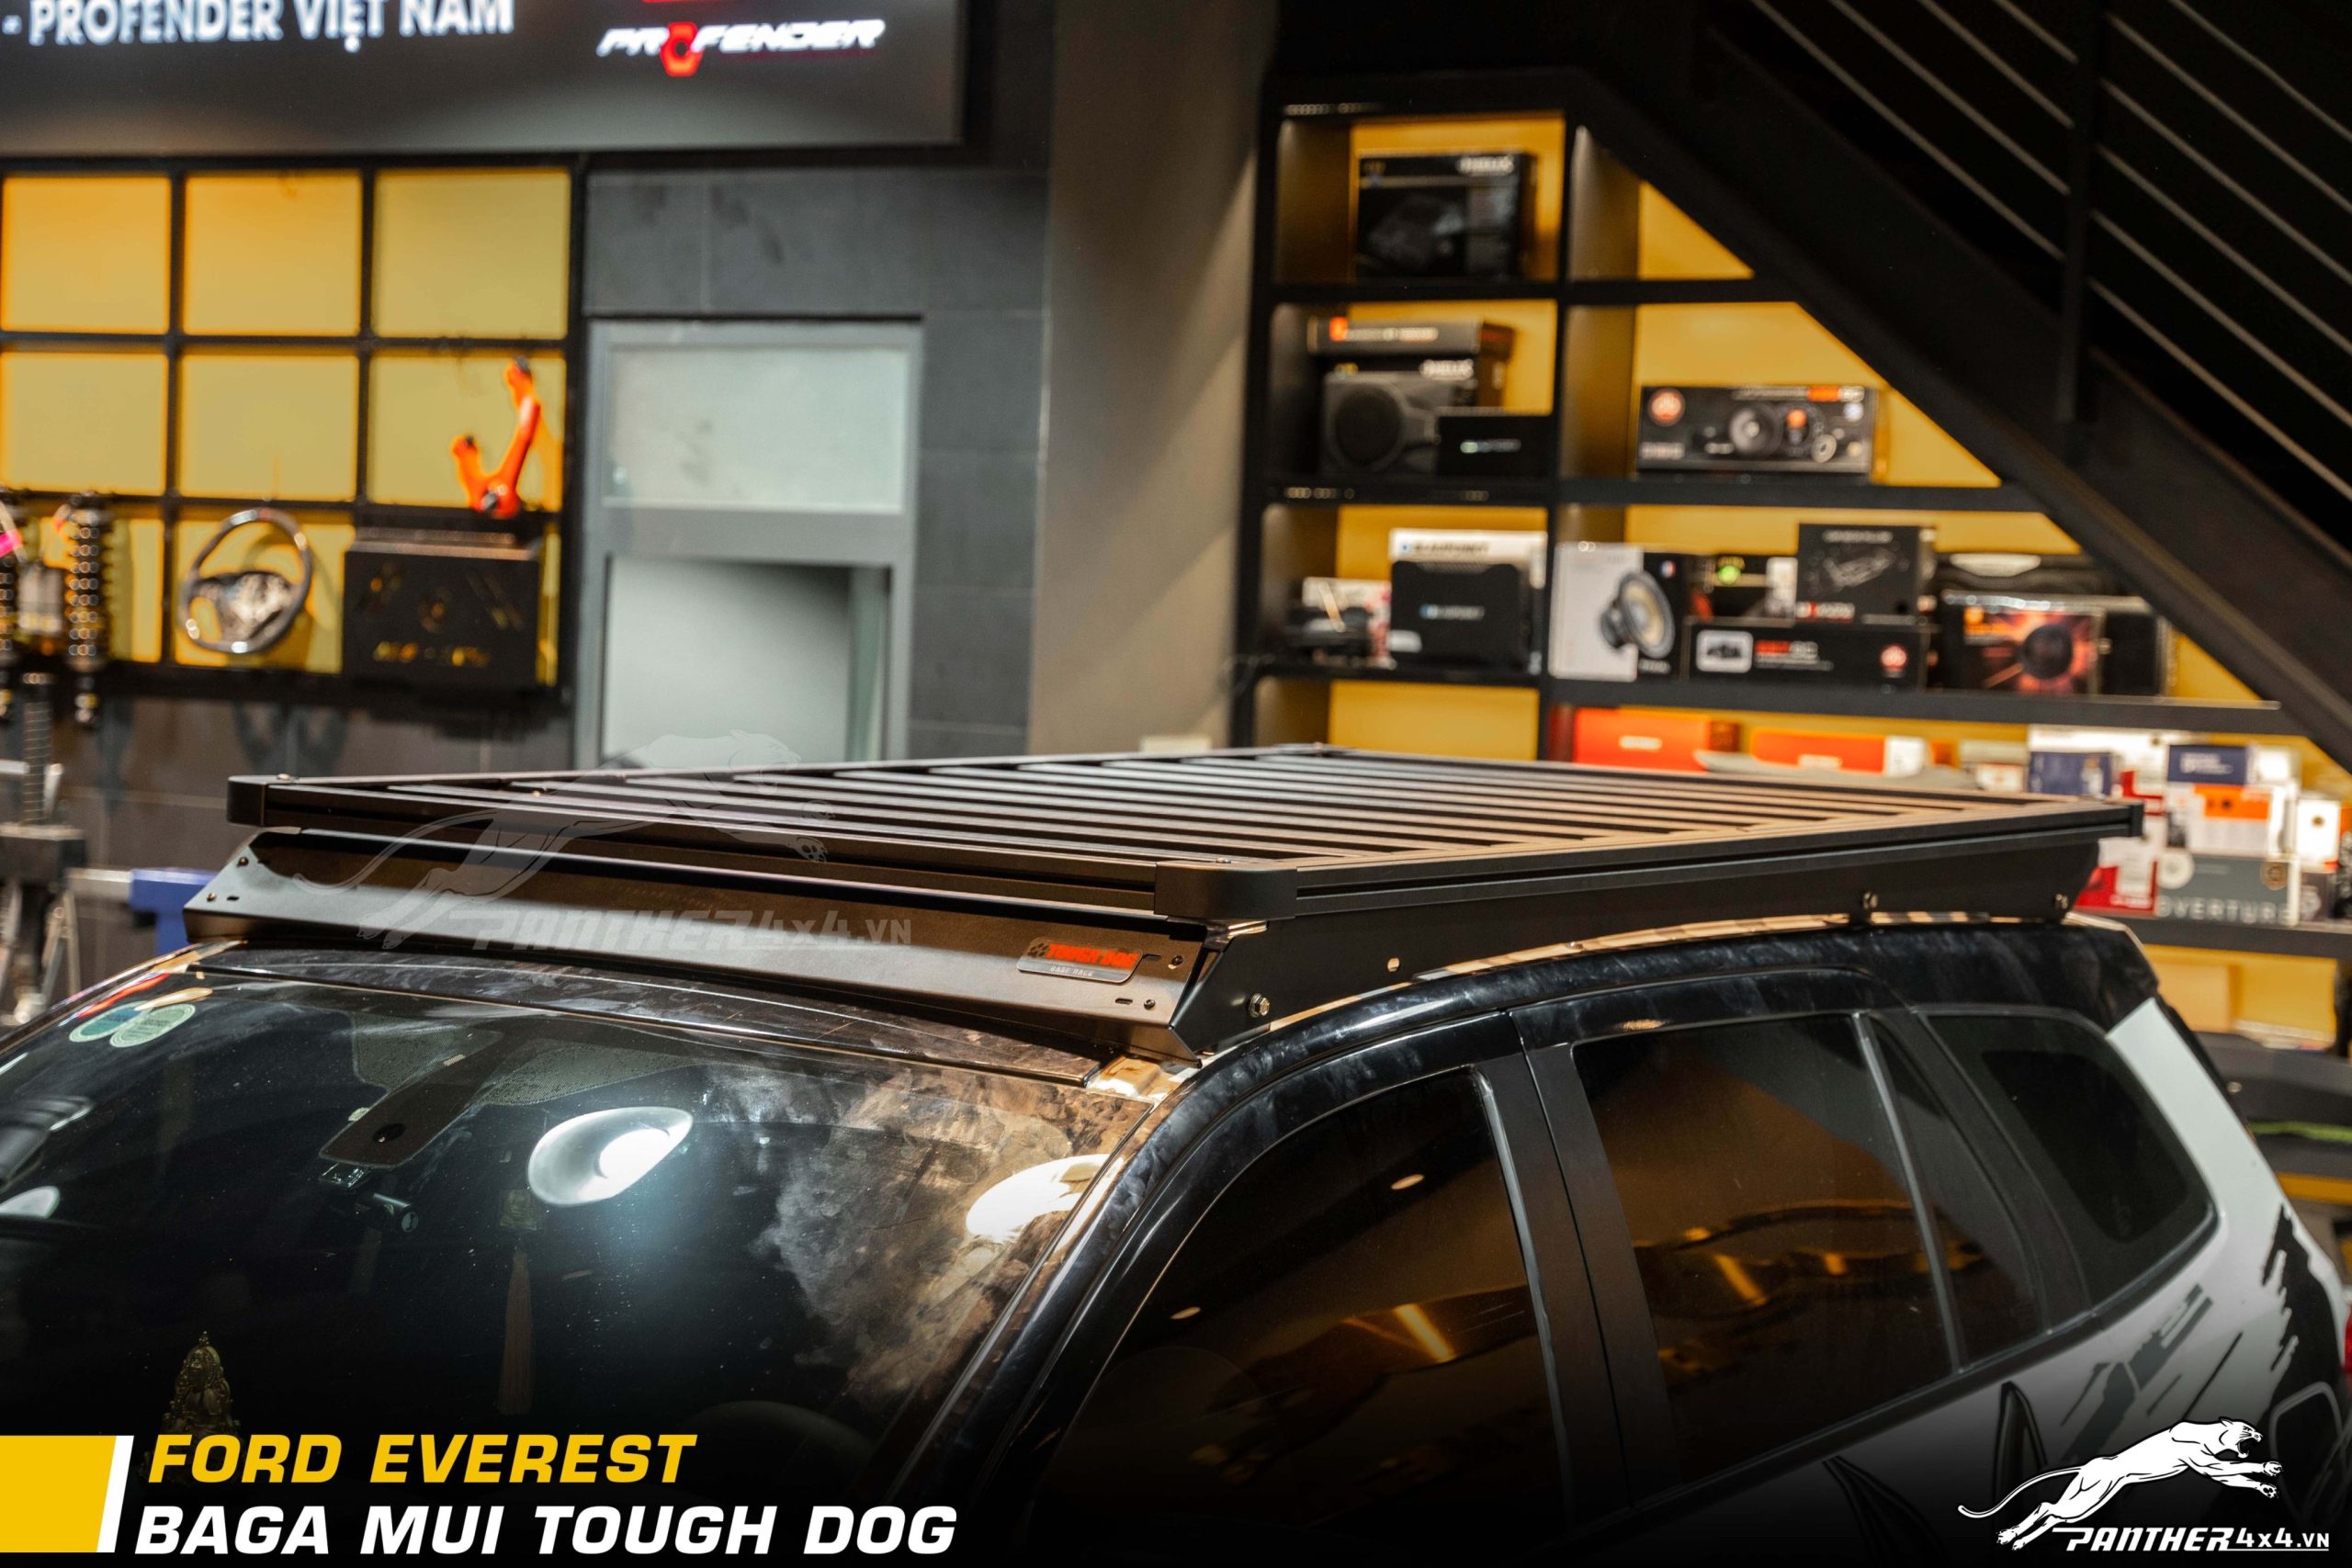 Baga mui Tough Dog cho xe SUV Ford Everest